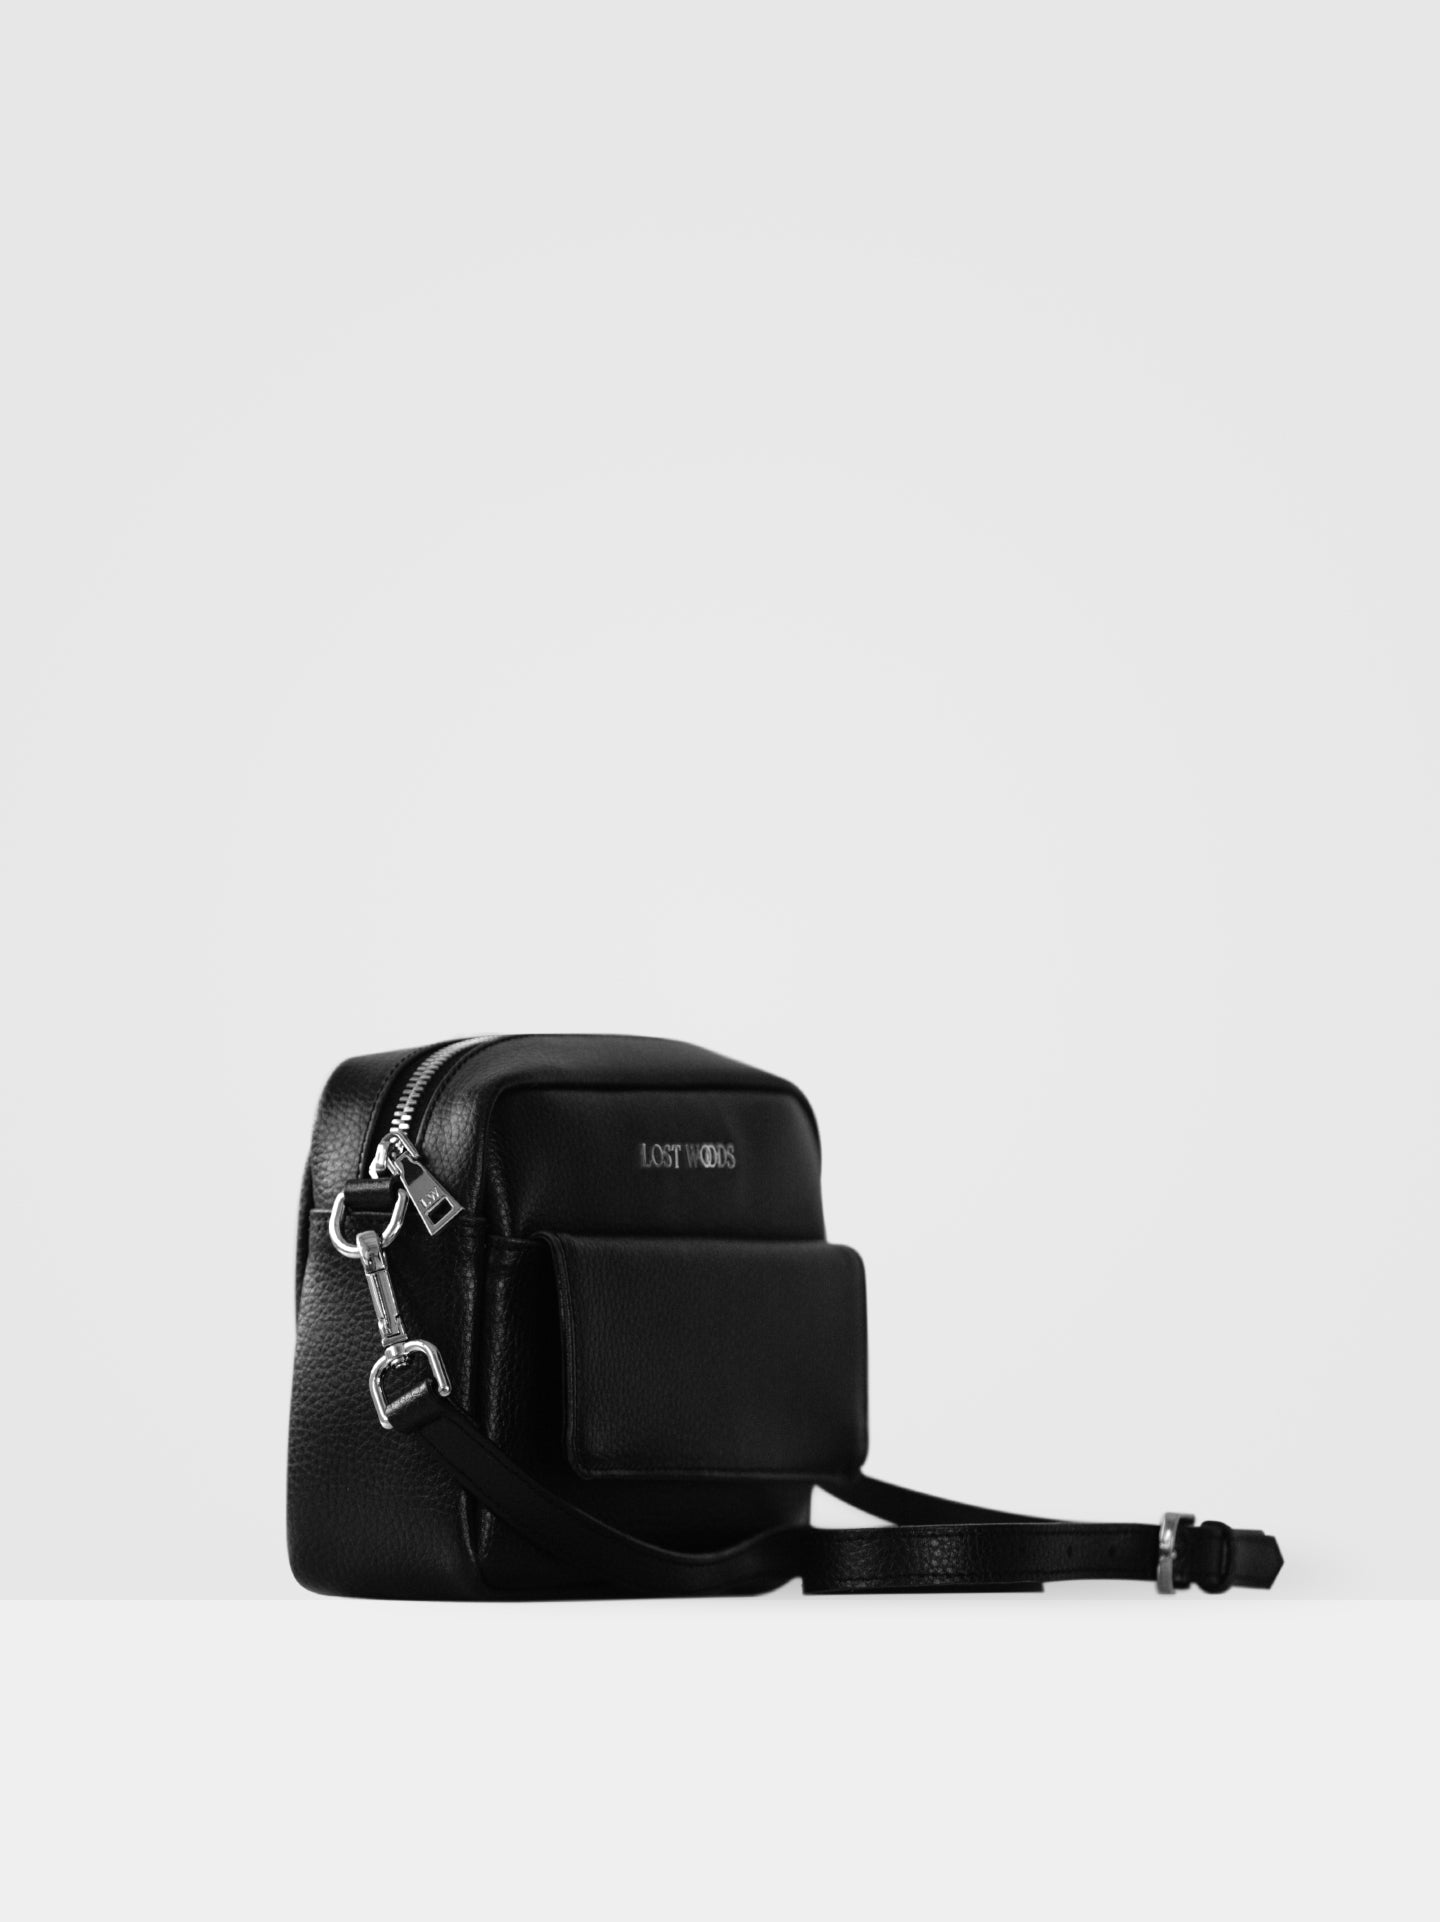 Aster Camera Bag, Black and Silver